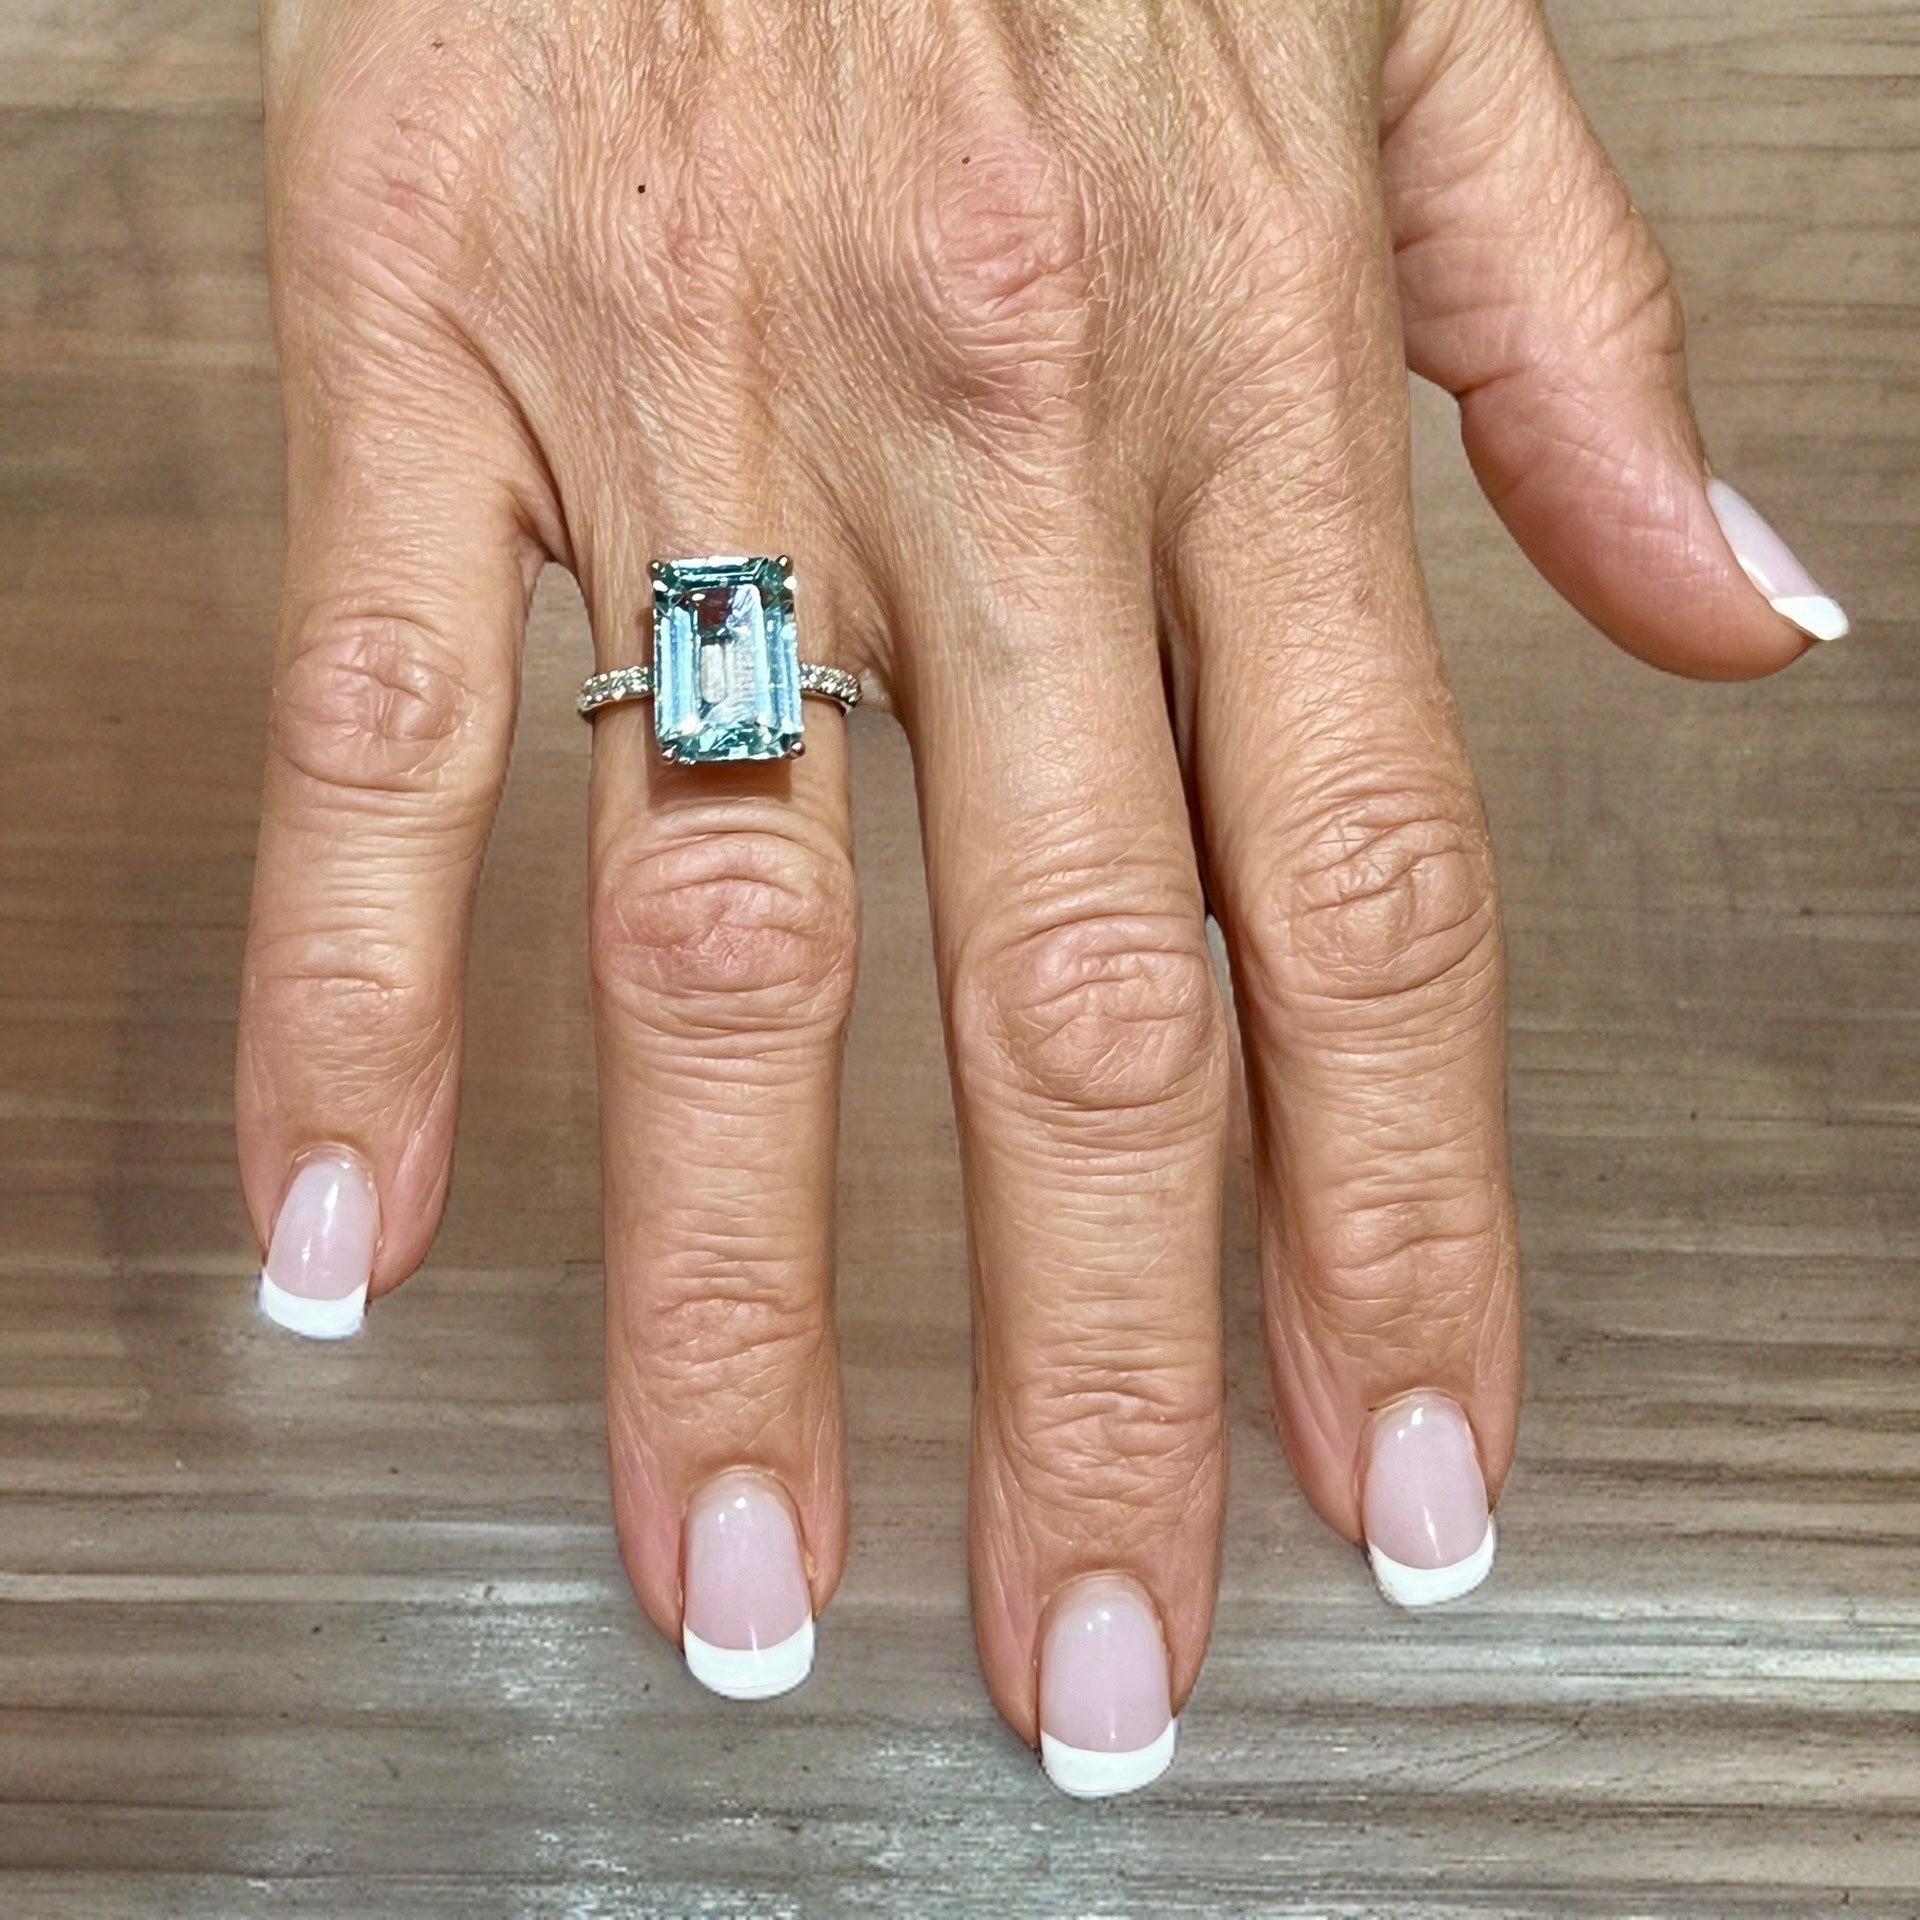 Natural Aquamarine Diamond Ring Size 6.5 14k W Gold 5.78 TCW Certified $4,795 217097 - Certified Fine Jewelry